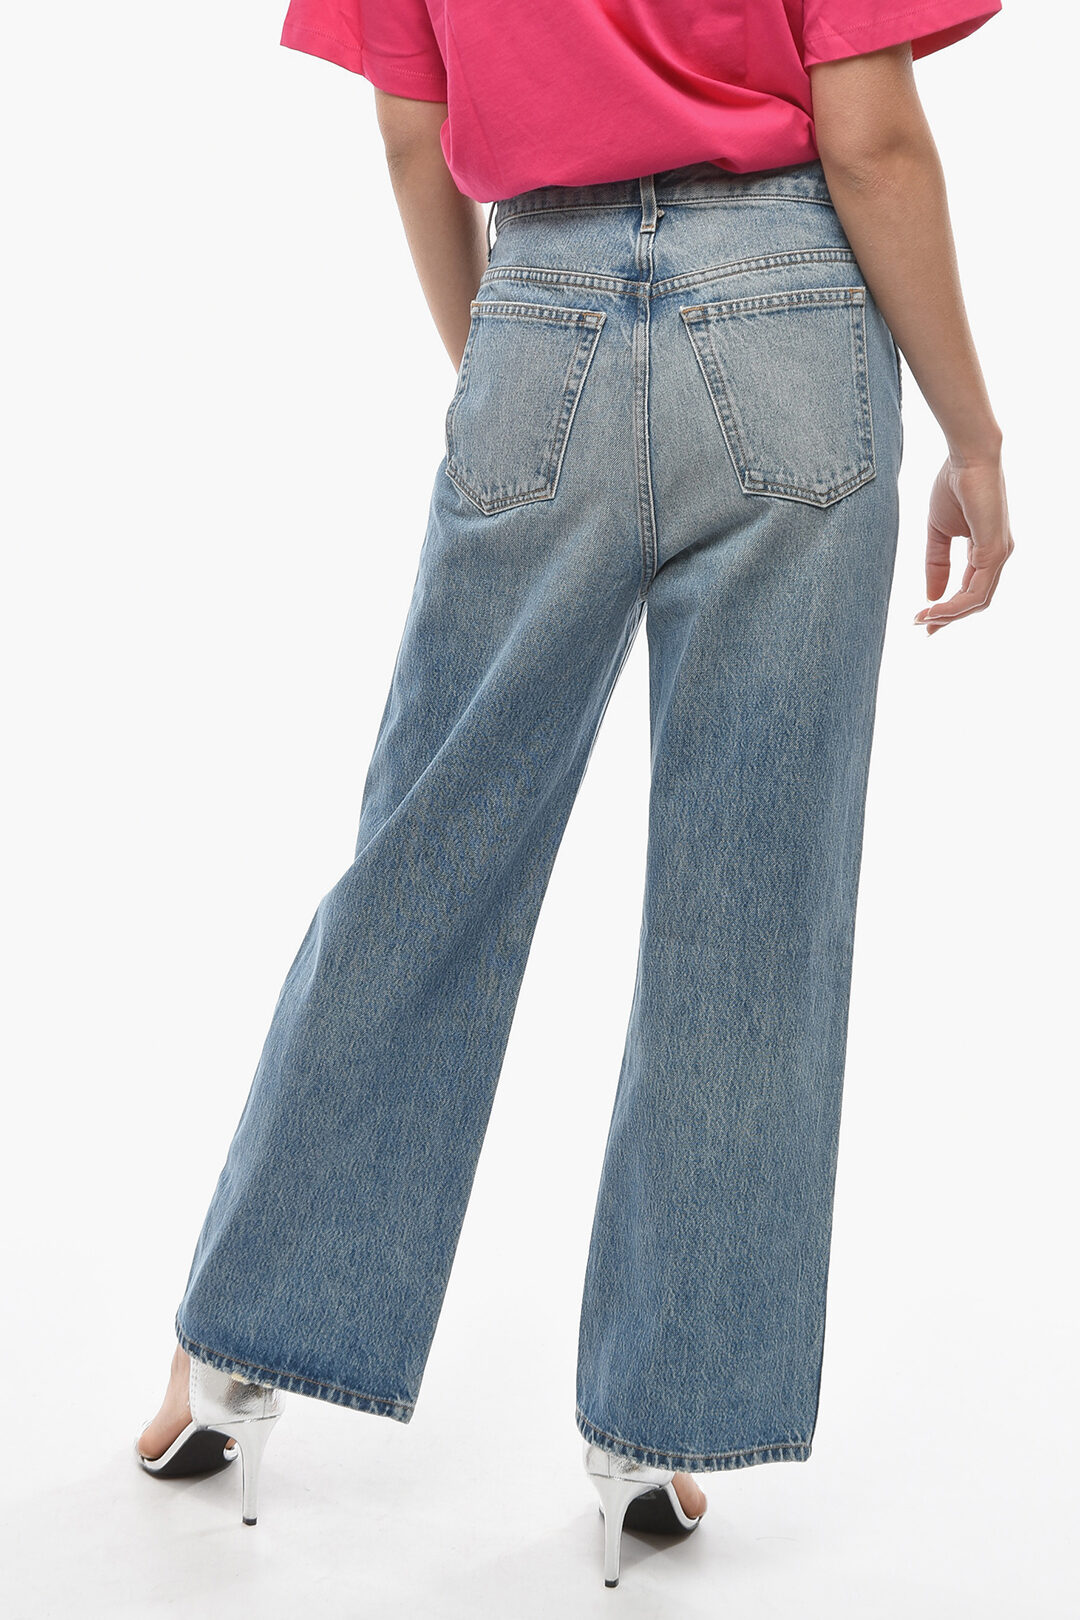 Khaite High-Waist Flared Jeans 26cm women - Glamood Outlet